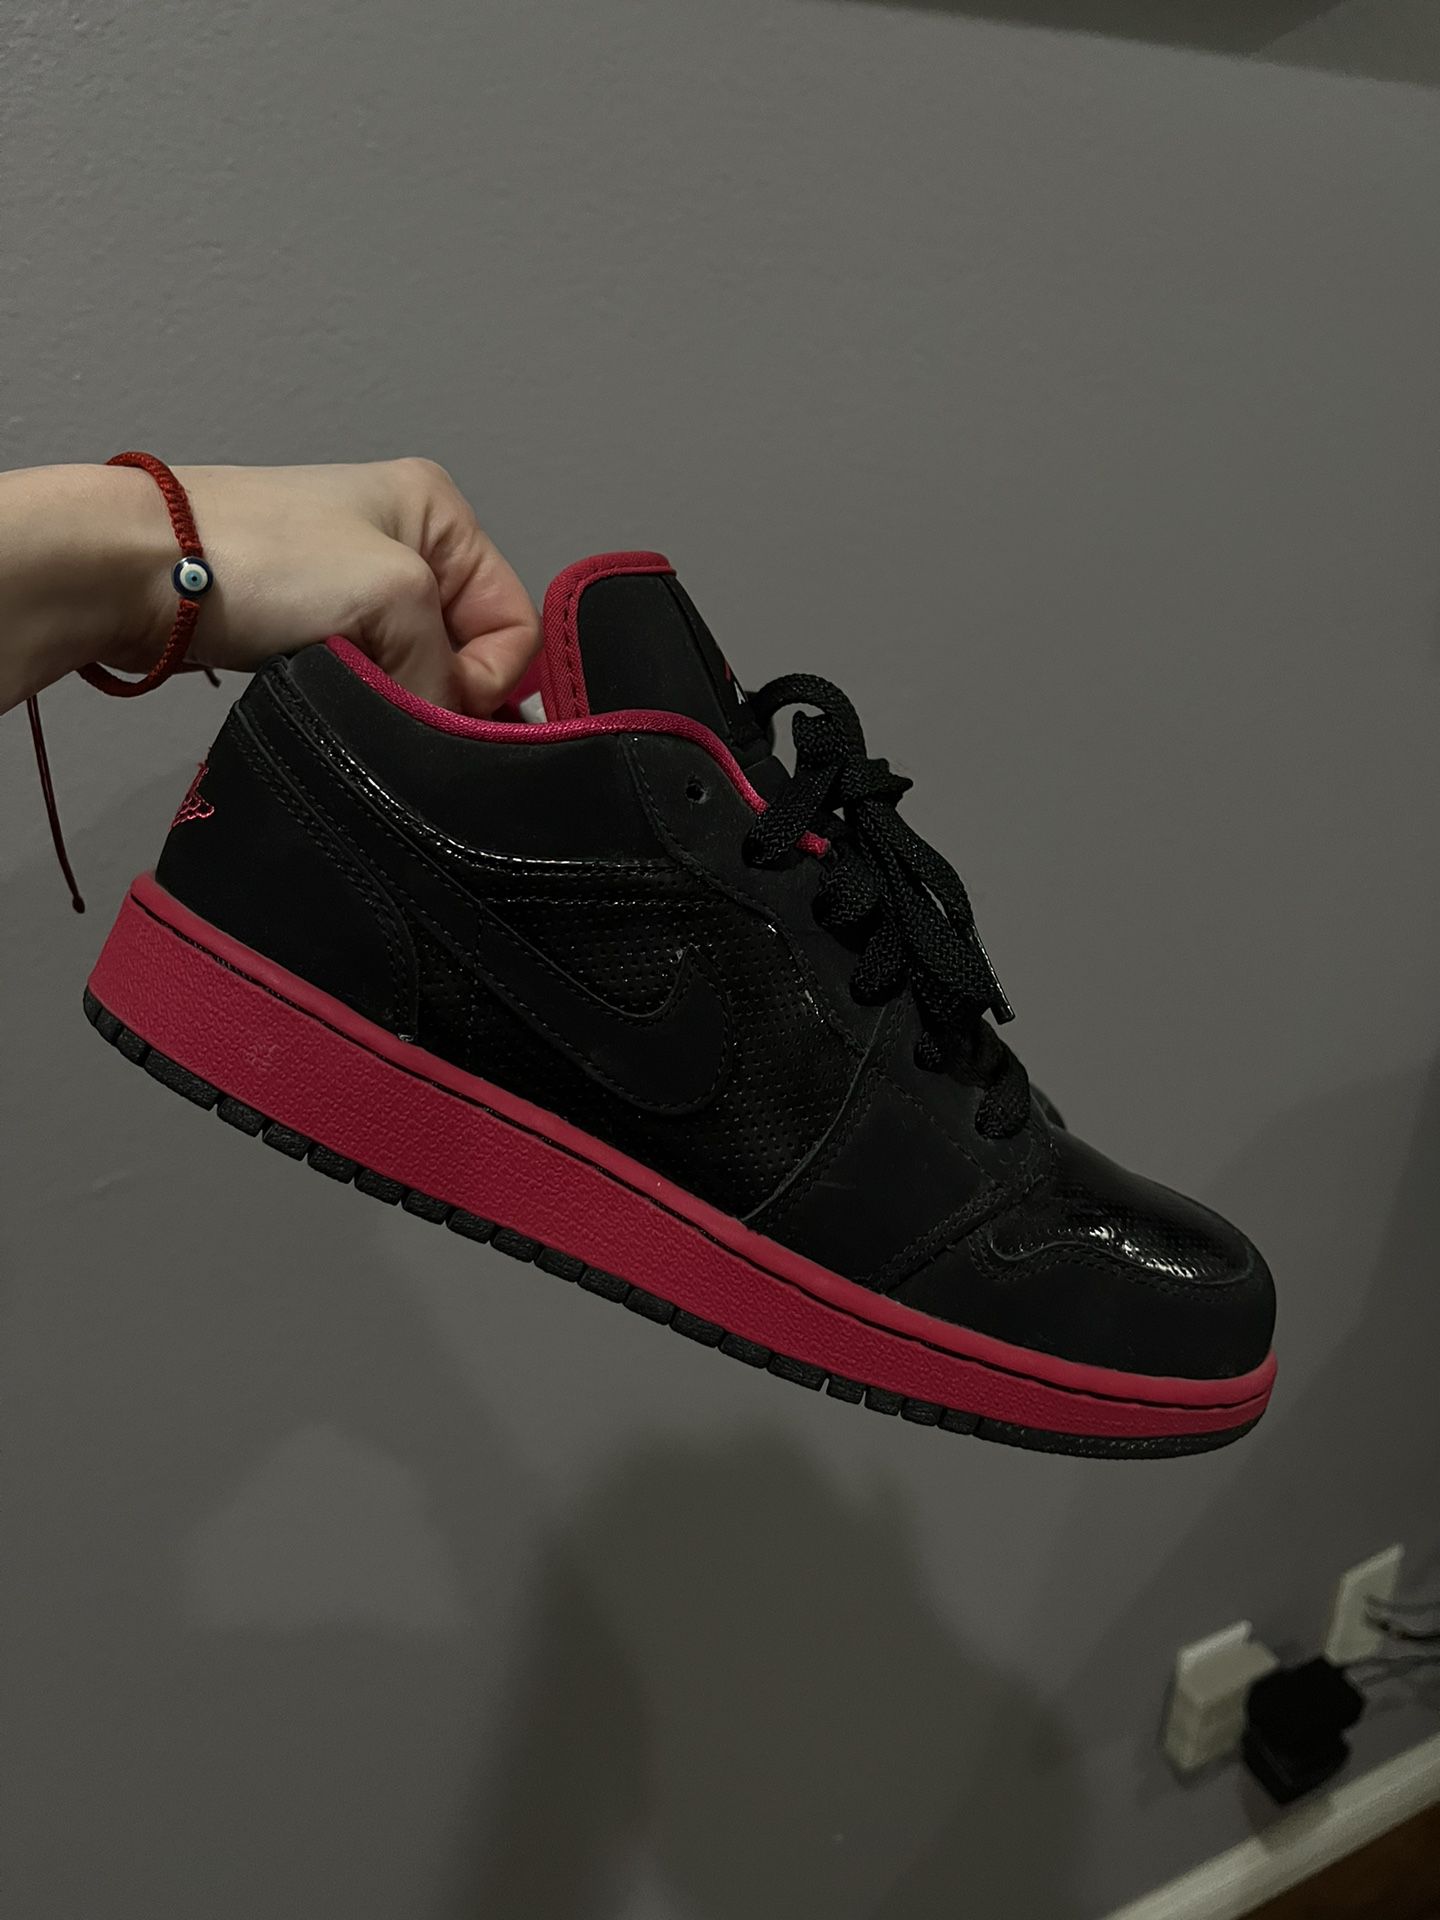 Nike Air Jordan 1 Low (GS) Black / Voltage Cherry Size 6Y